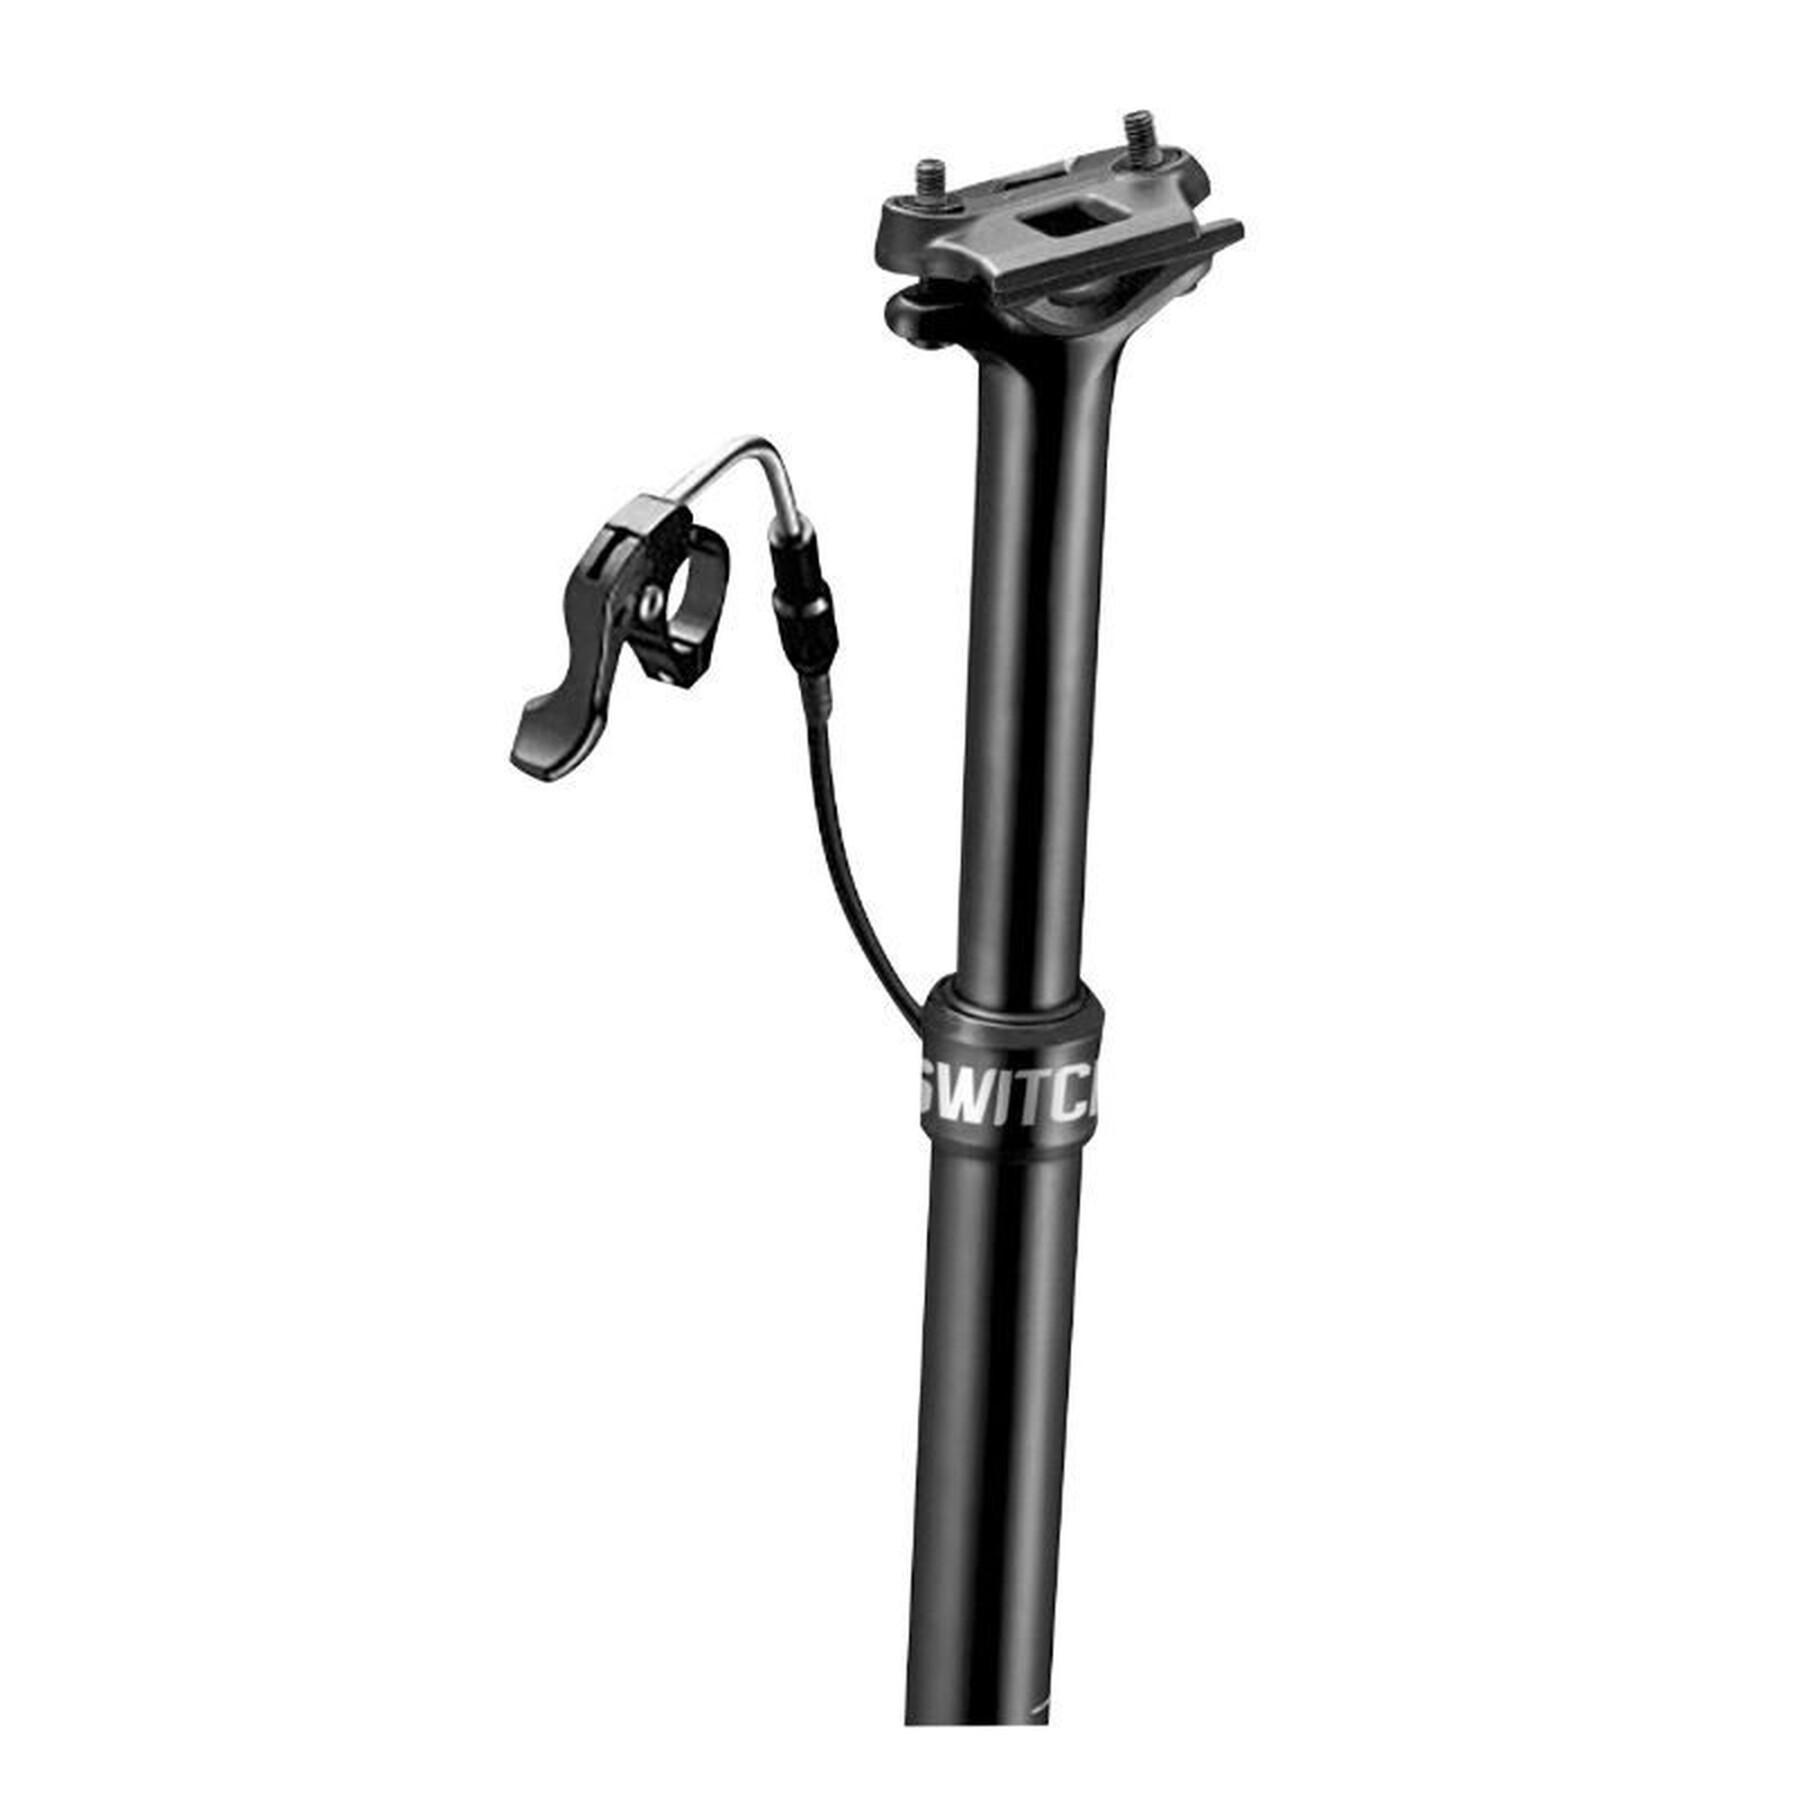 Tija de sillín ajustable para bicicleta de montaña con cable interno, centro de fijación del cartucho de aire con presión de aluminio Gist Switch SW-80